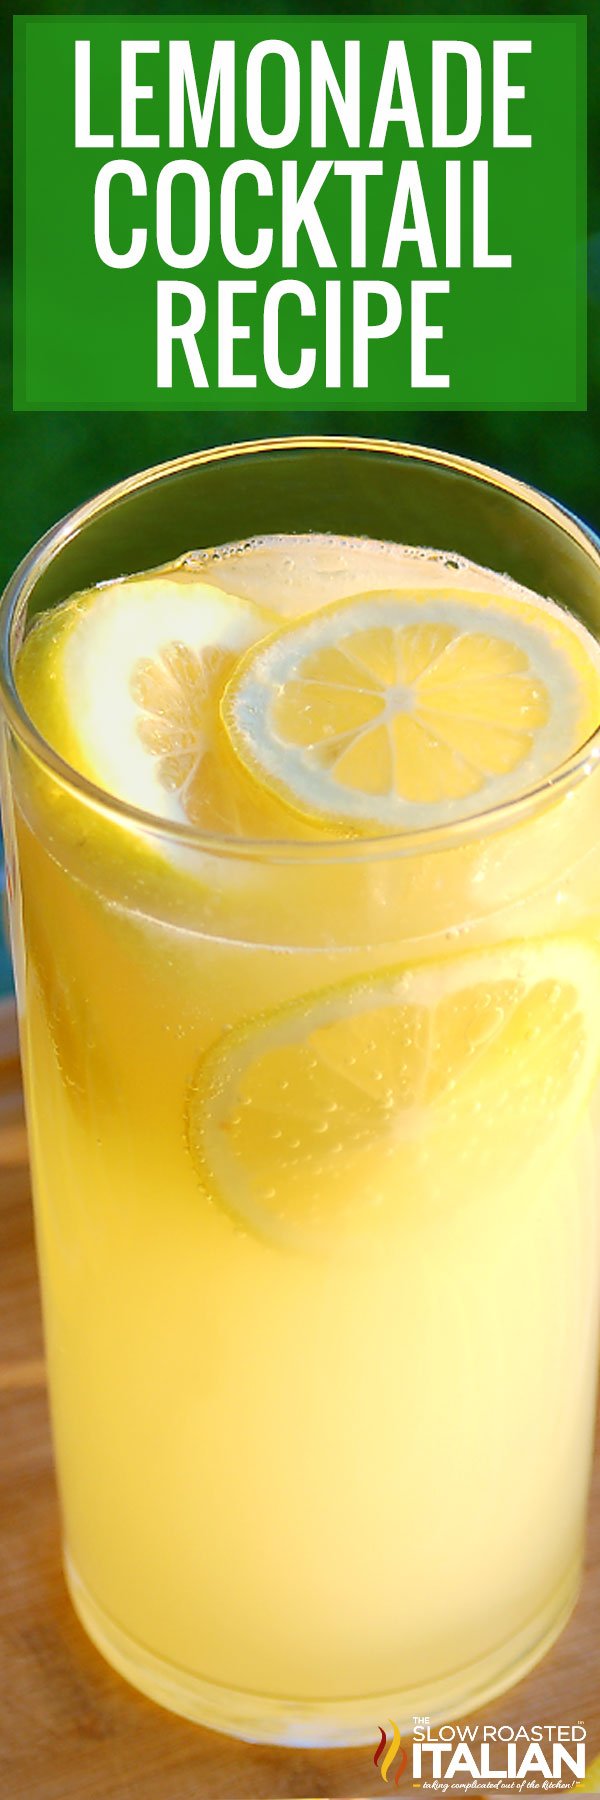 titled pinterest image for lemonade cocktail recipe